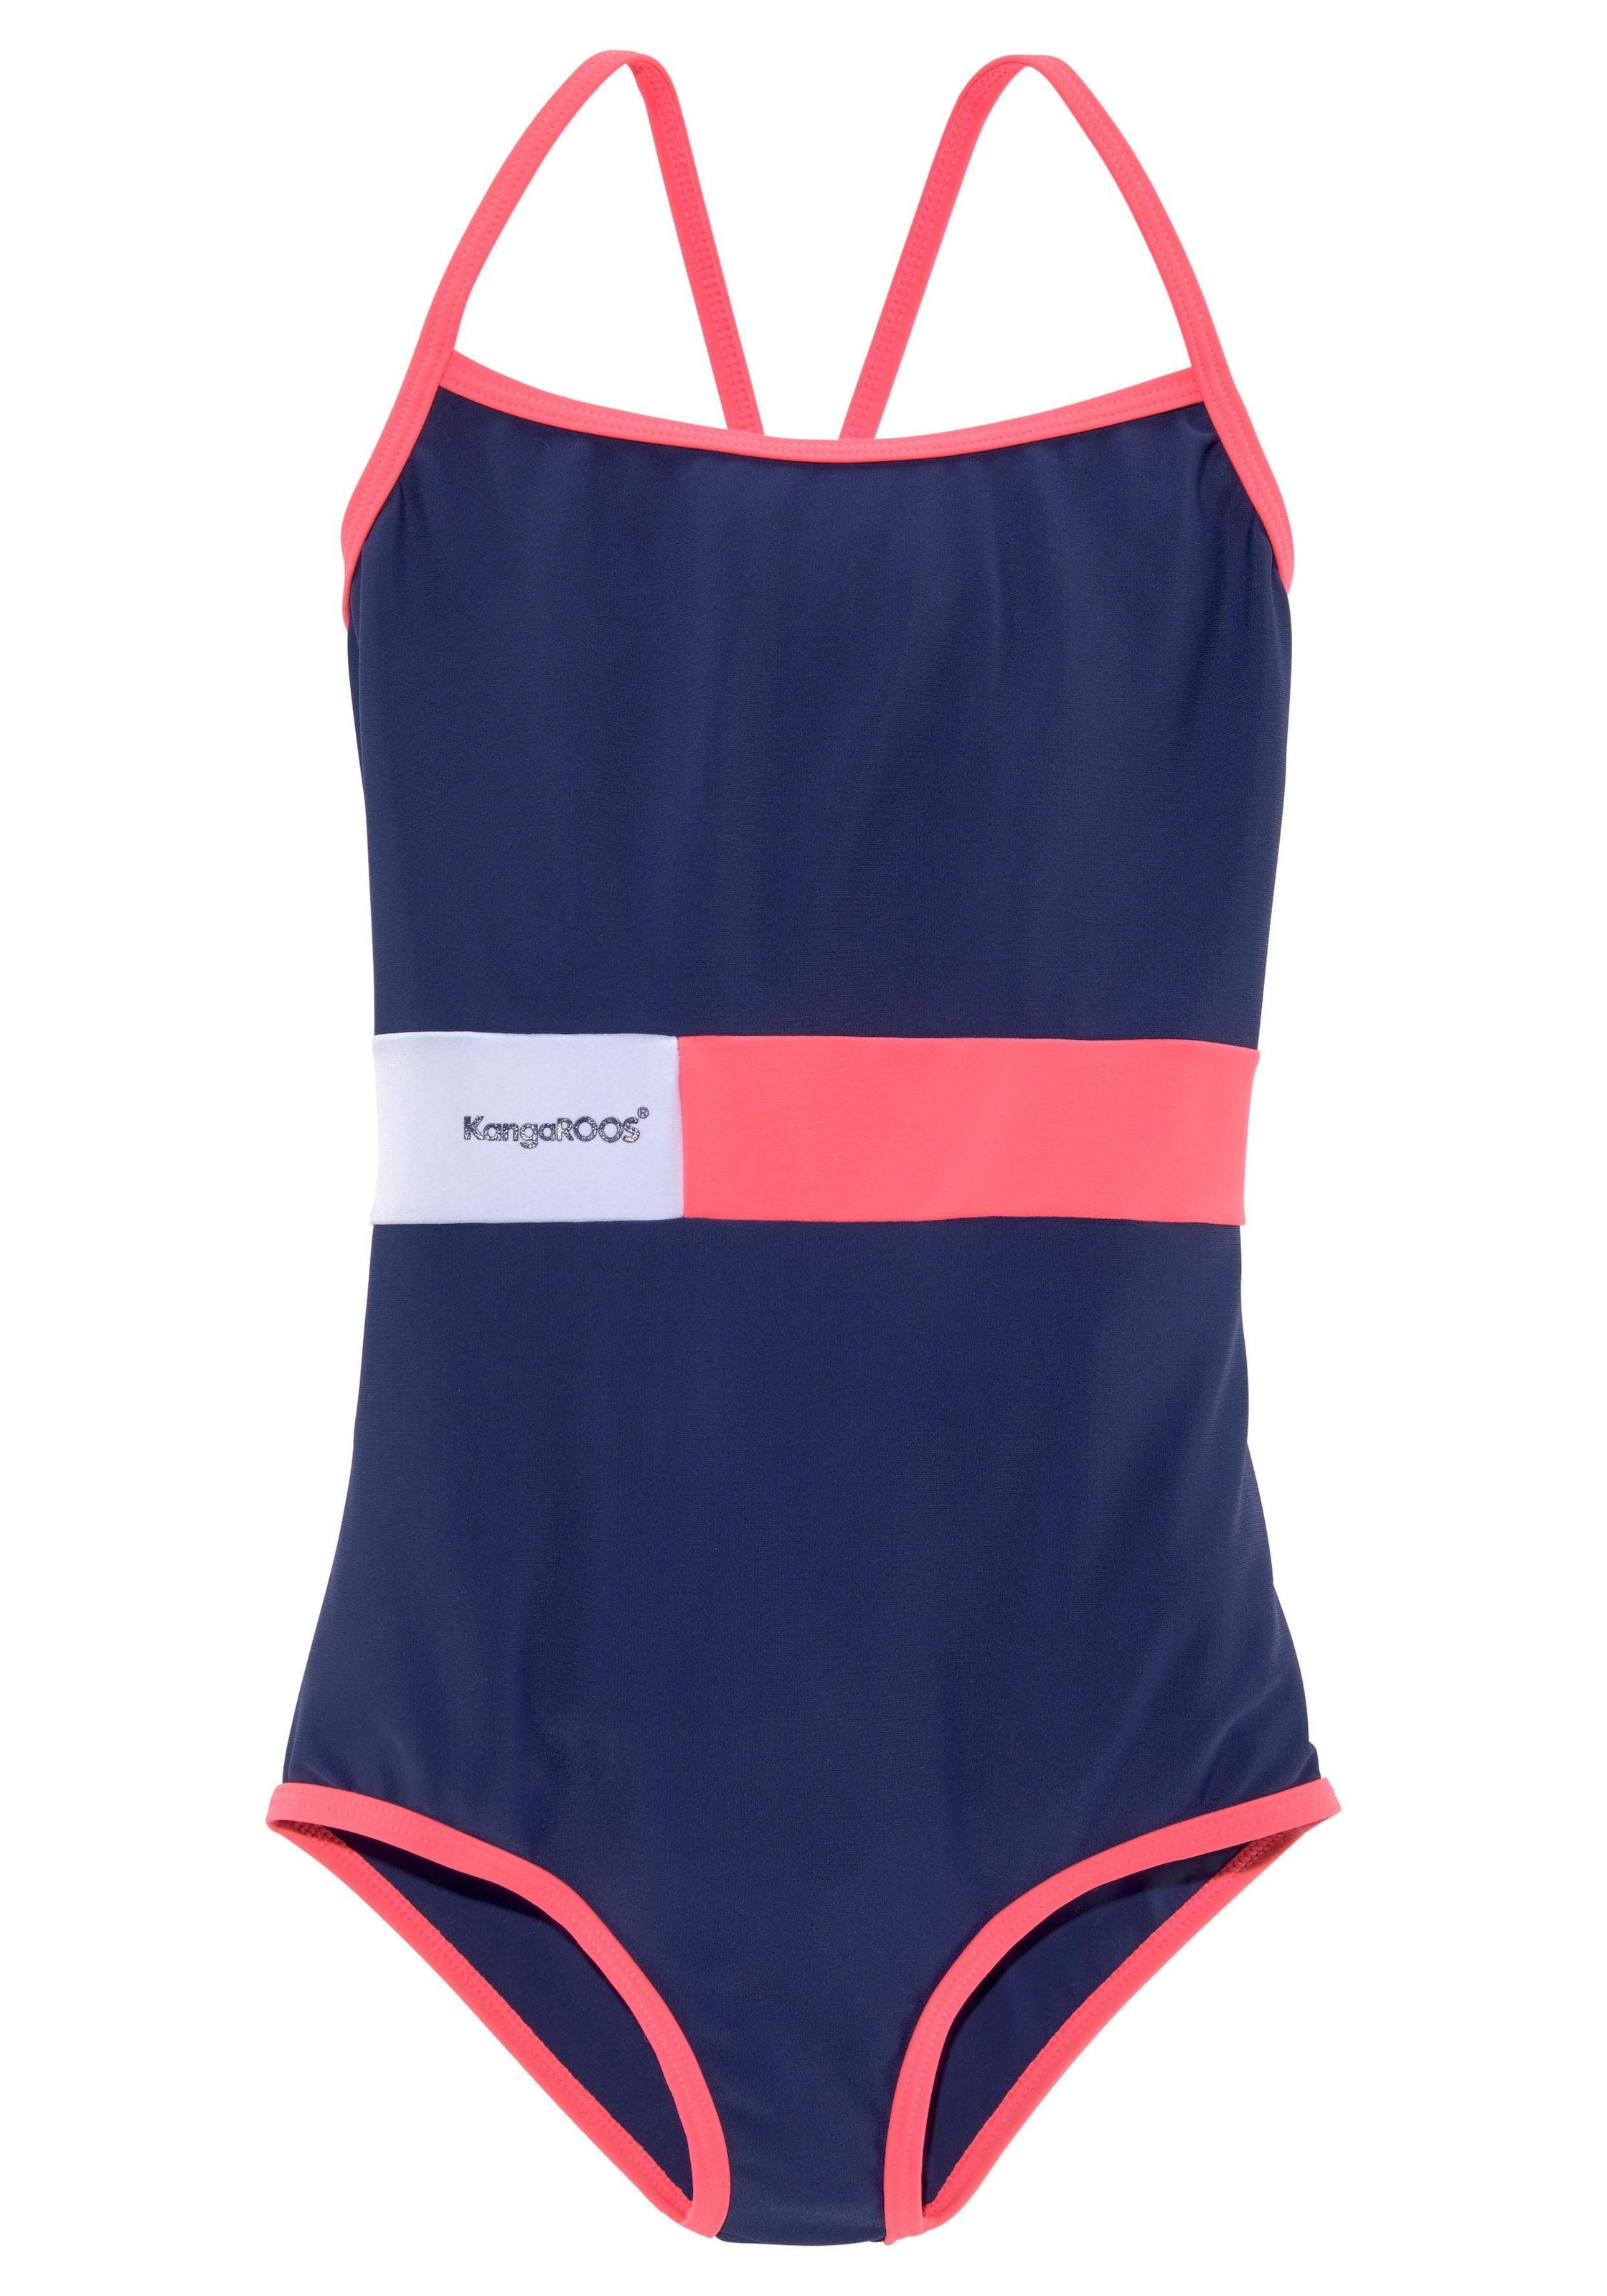 KangaROOS Badeanzug, (1 St.), im Colorblocking-Look jetzt bestellen